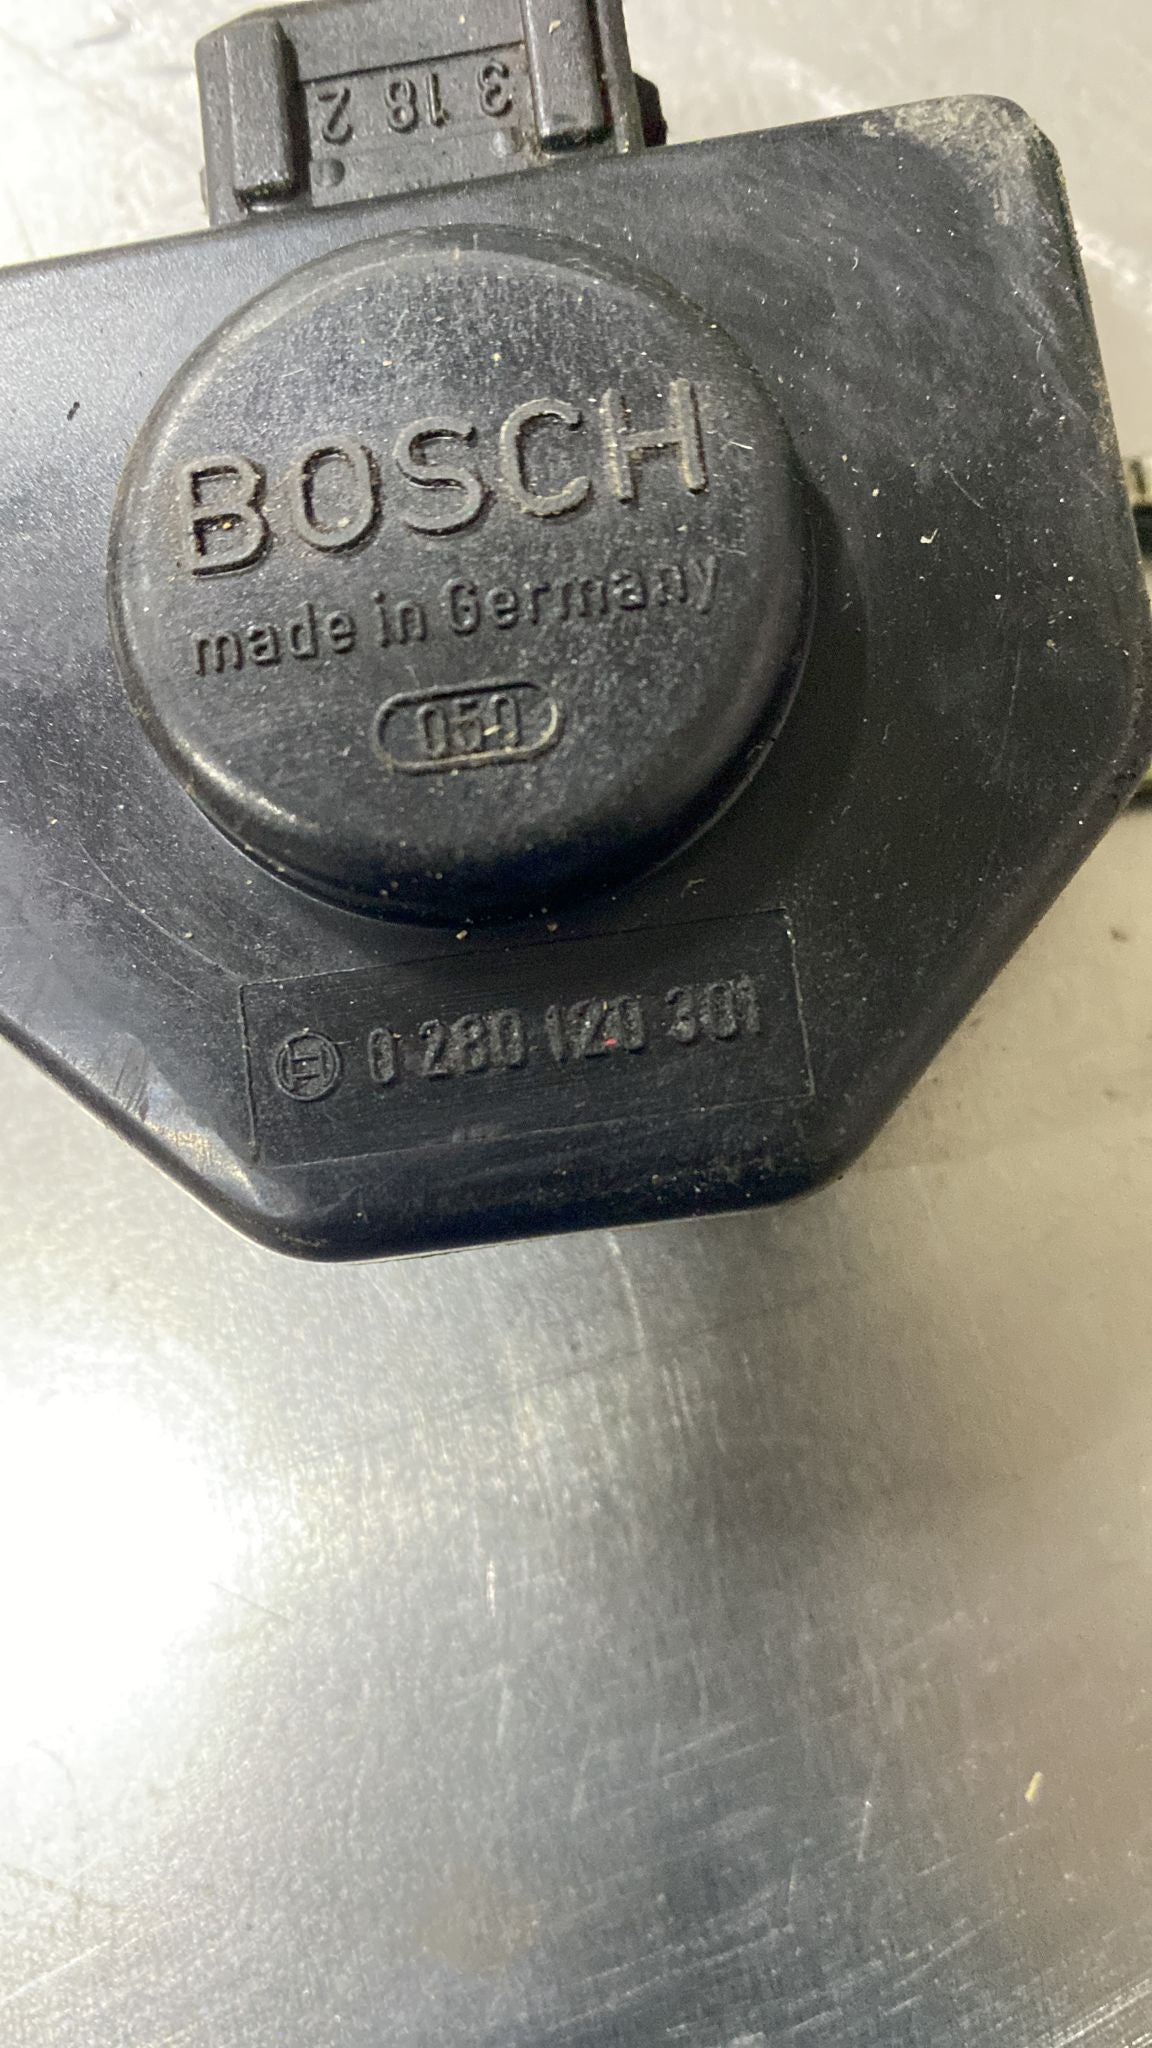 Bosch fuel injection timing sensor / throttle position sensor, used 0280120301